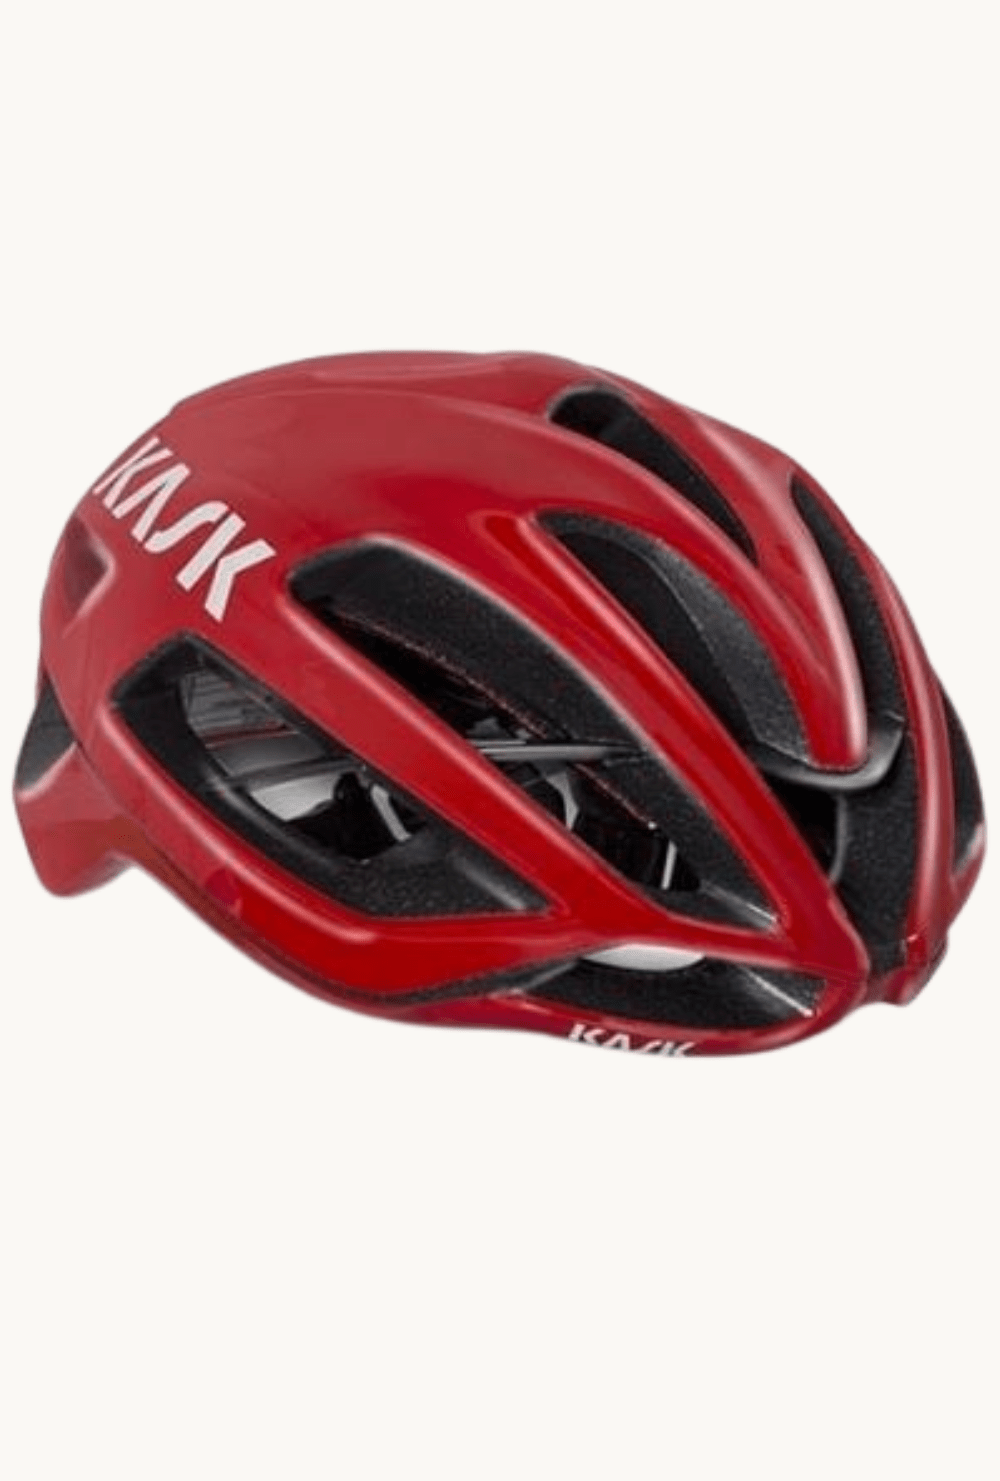 Helmet - Kask Protone Redlarge (59-62cm) / Red